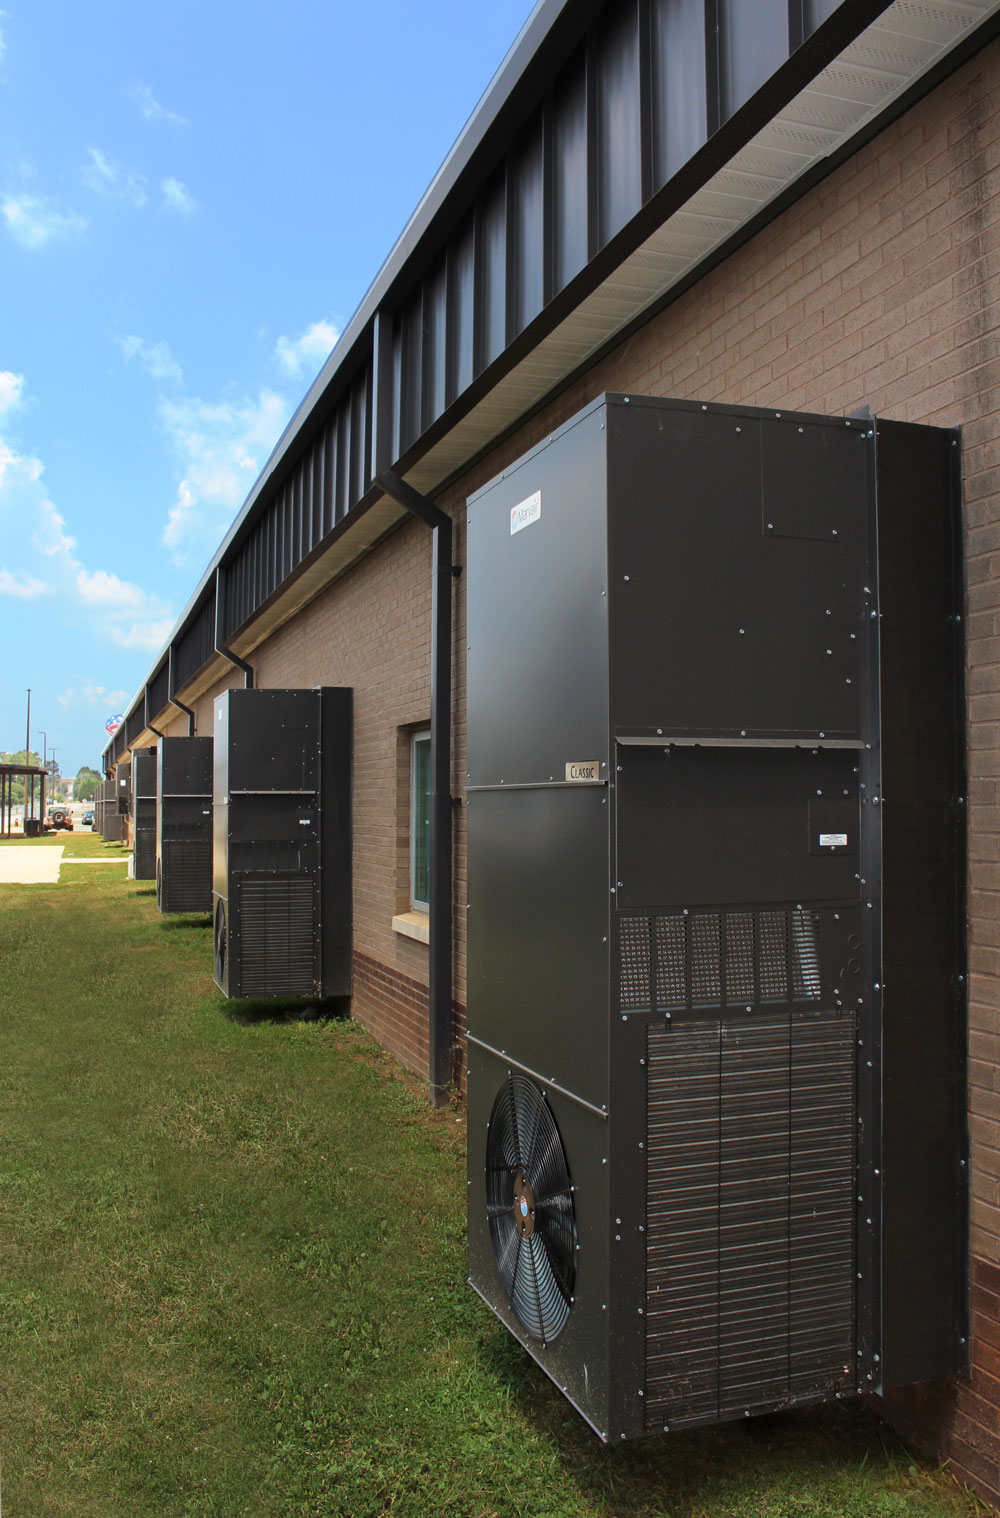 Exterior air conditioning units